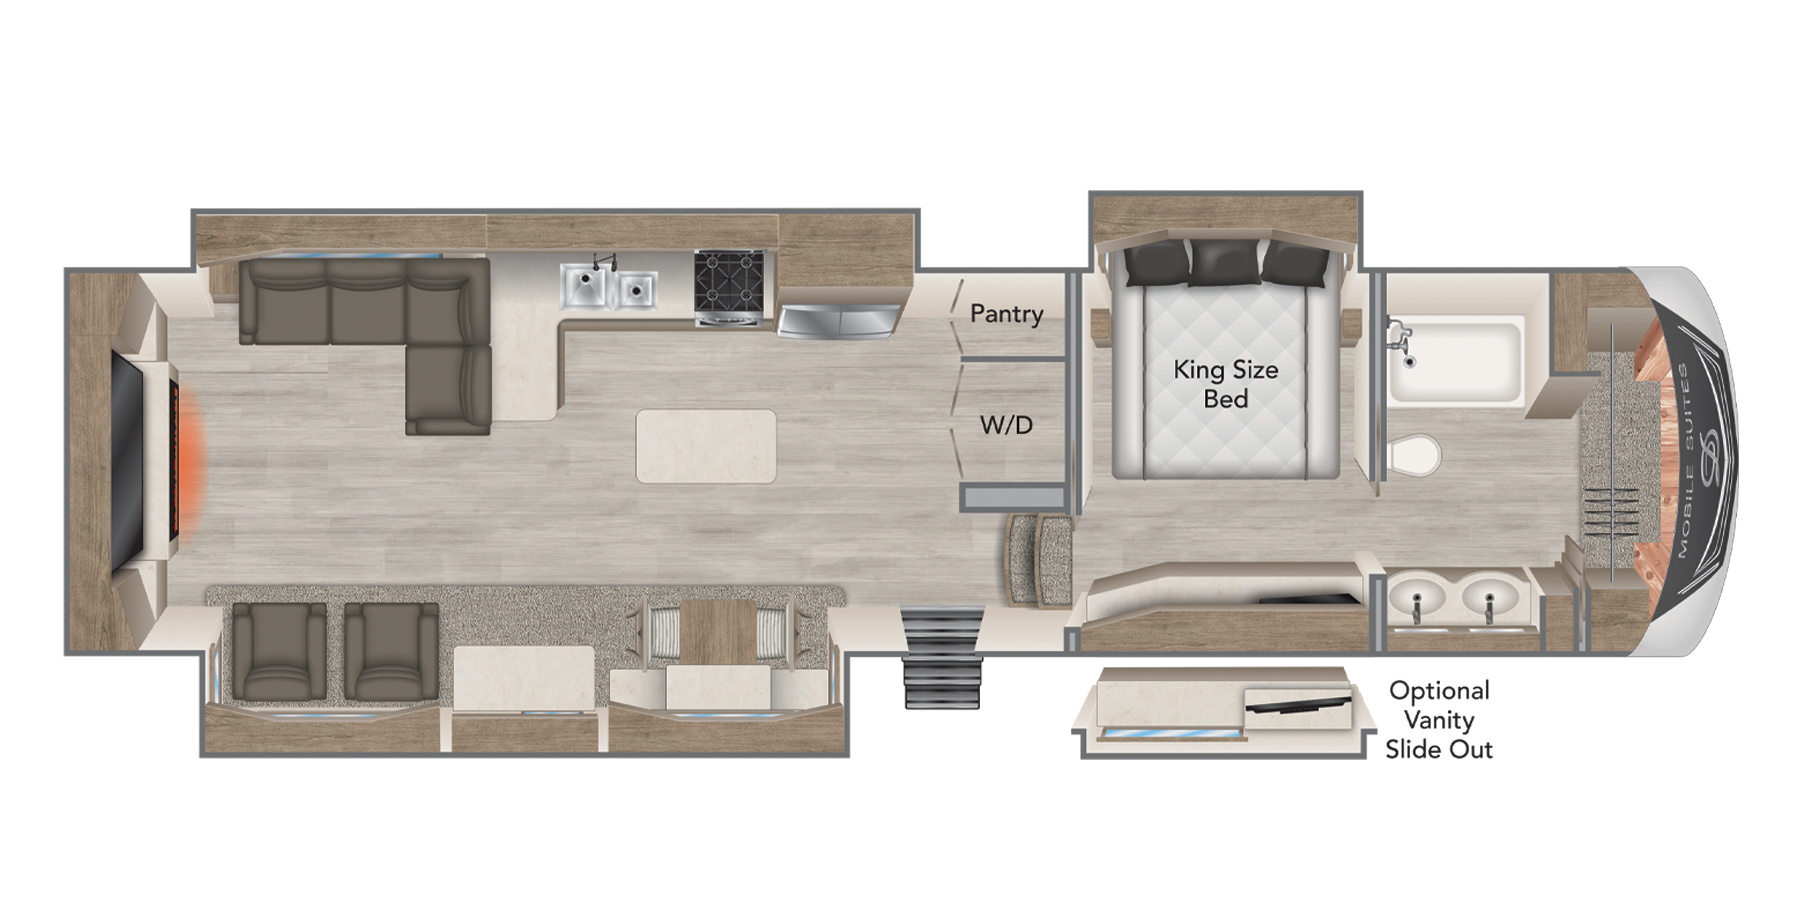 DRV-Mobile-Suites-44-Santa-Fe-Floorplan-3D